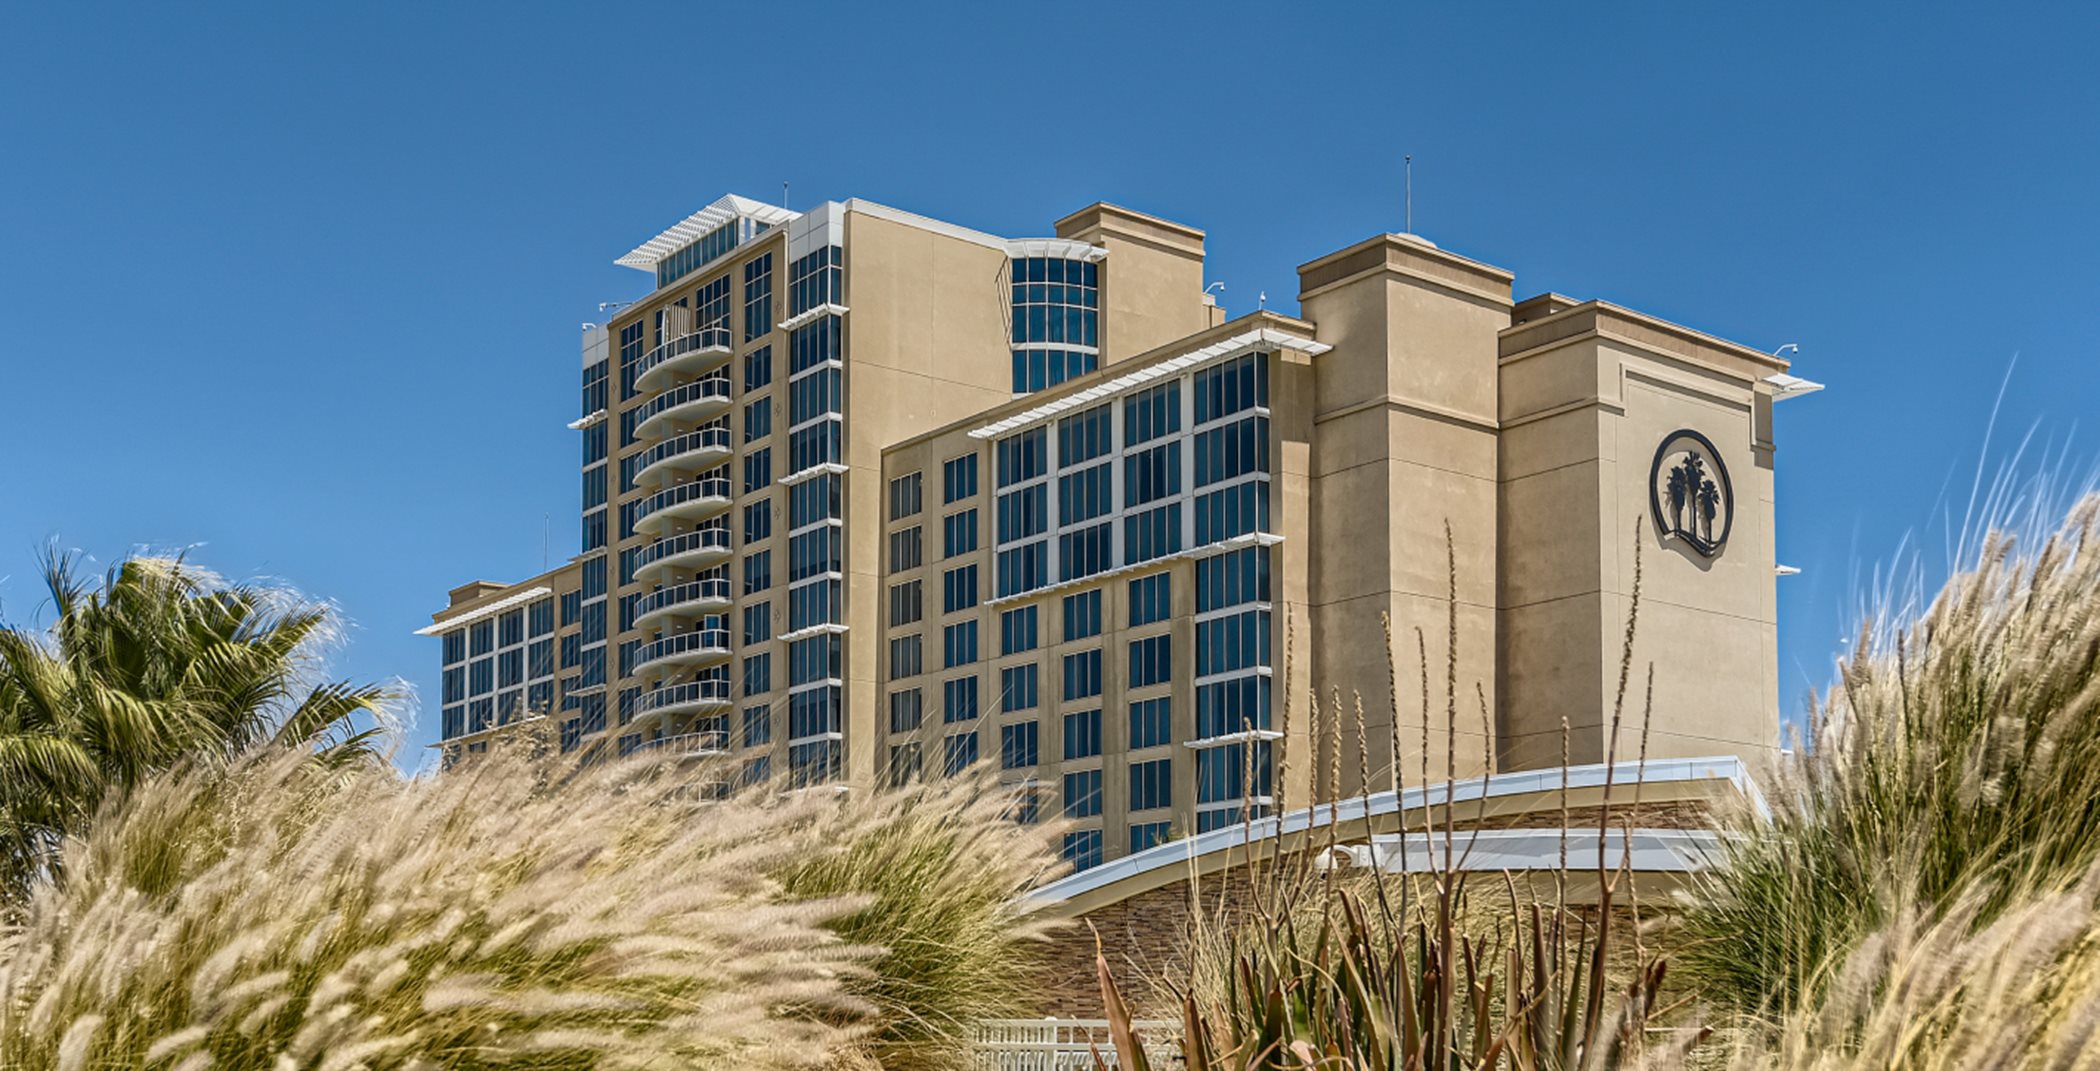 Agua Caliente Resort building